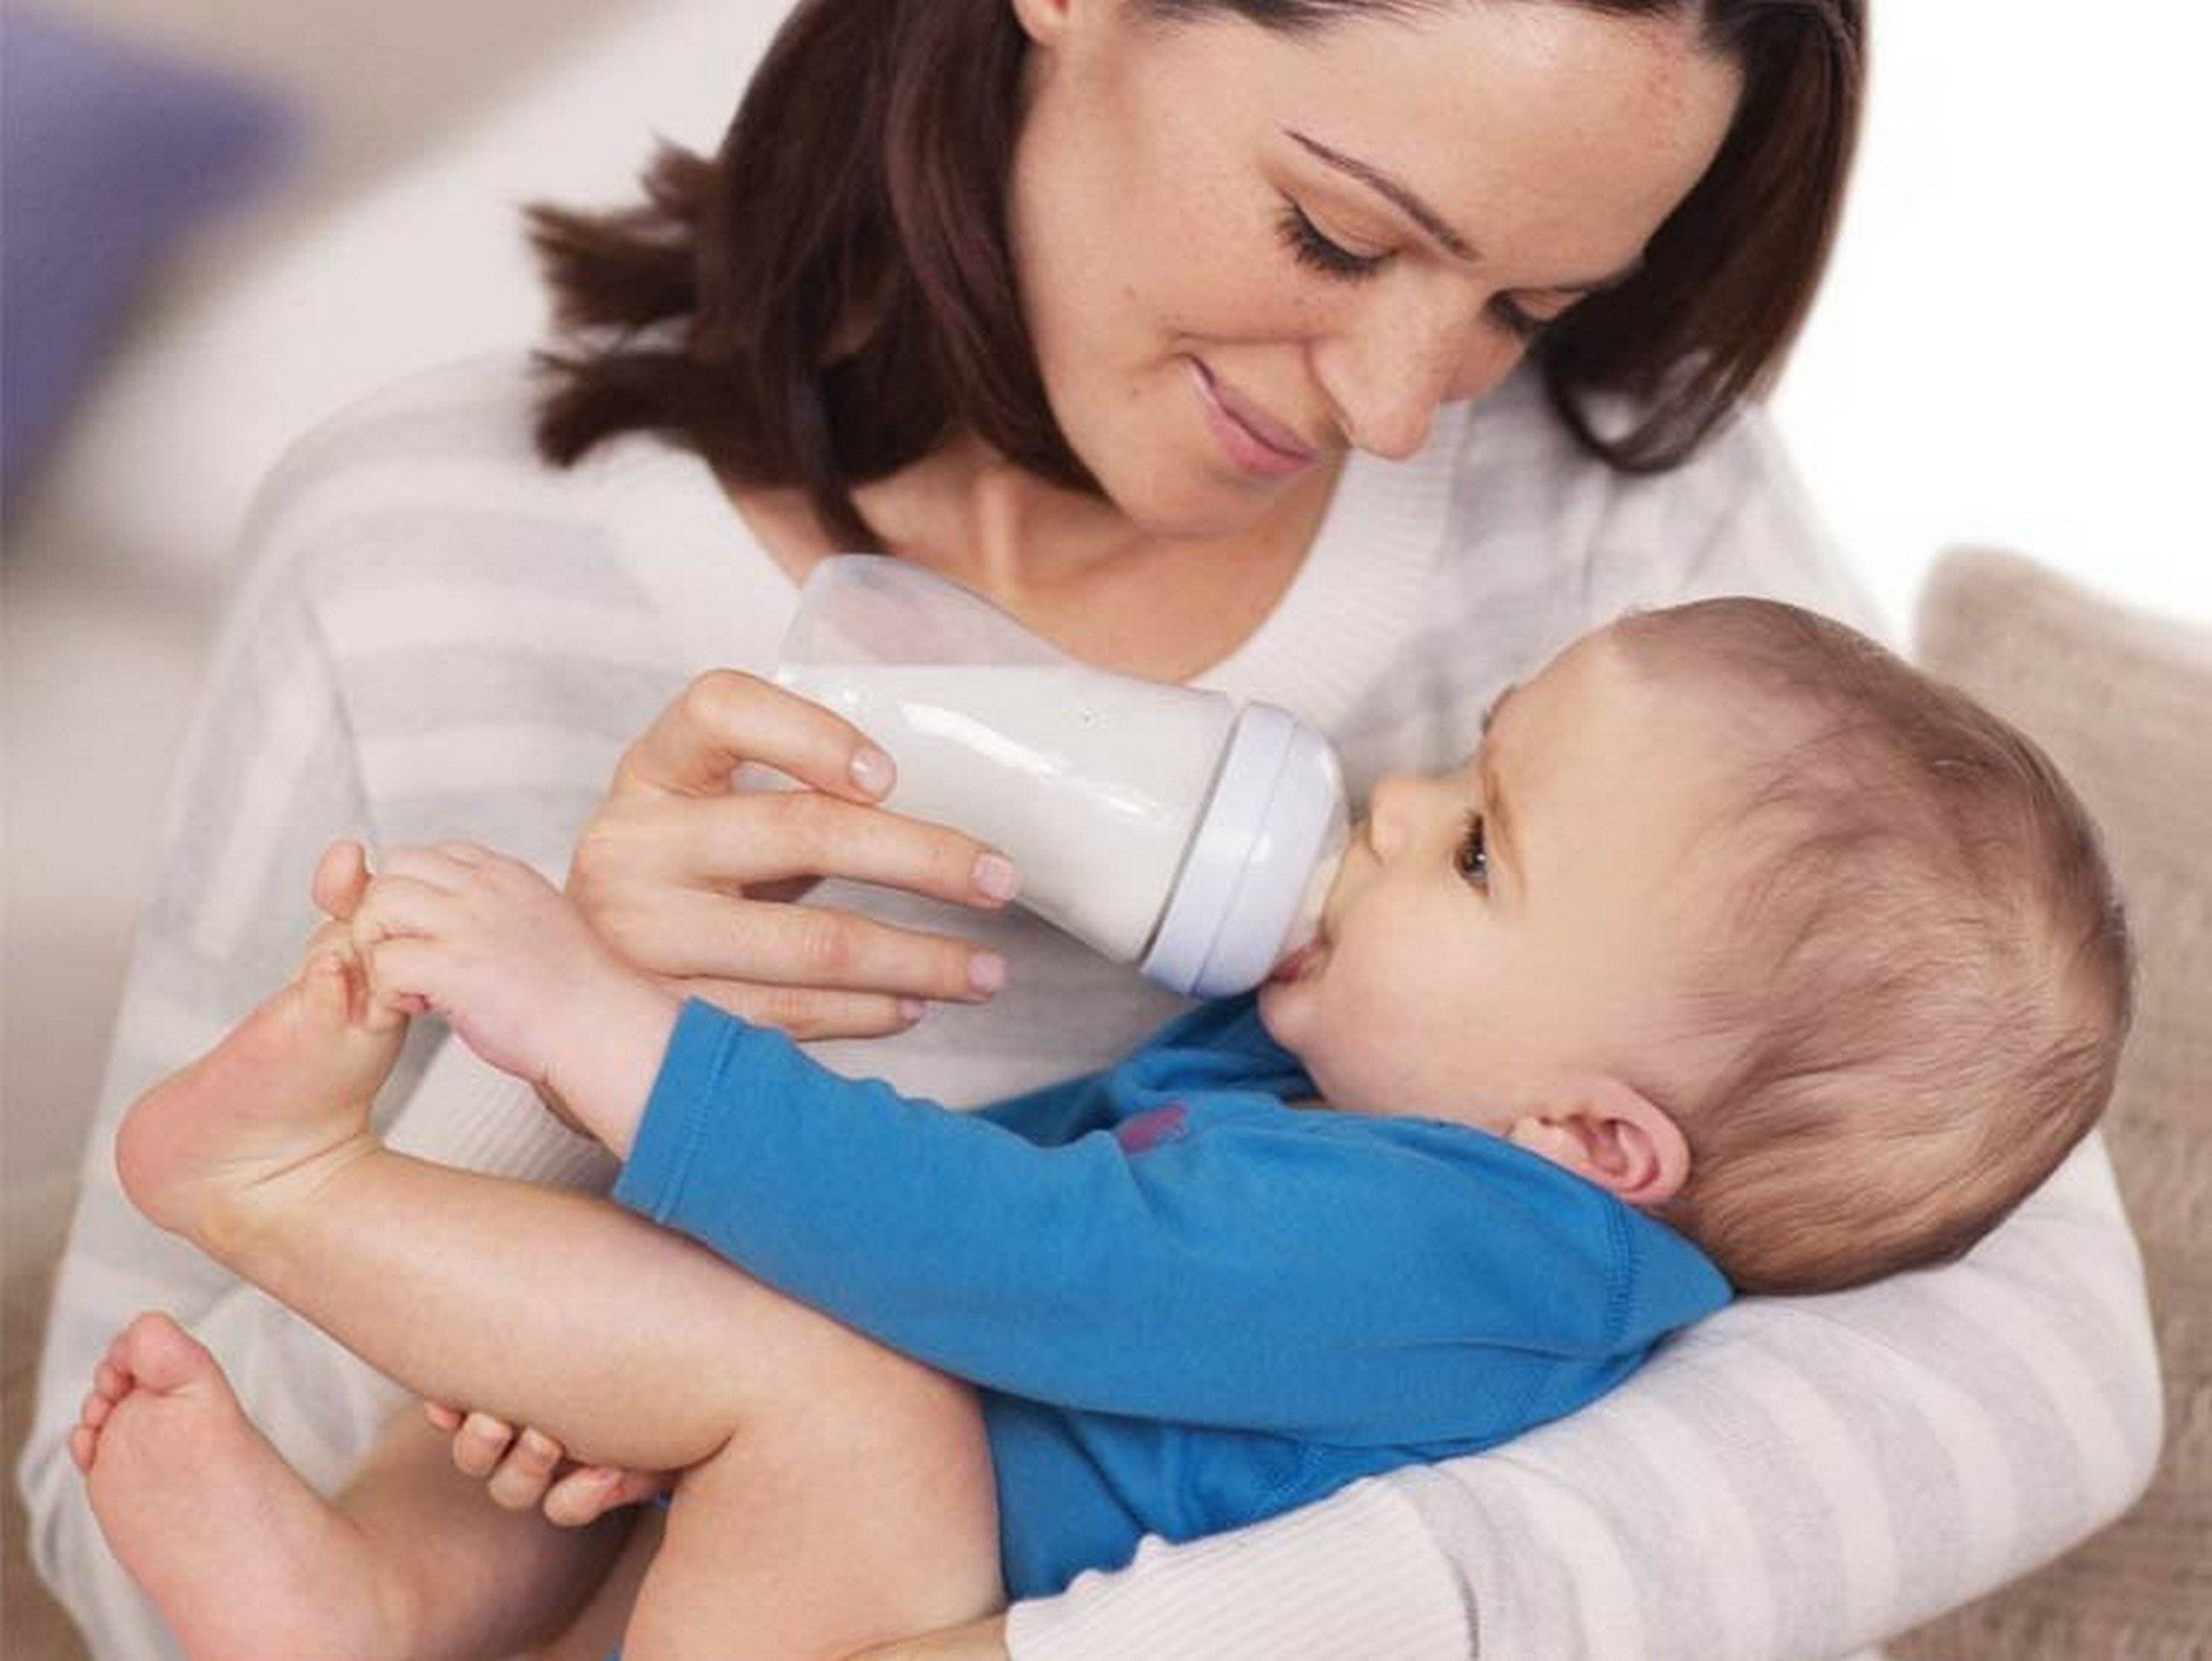 Техника вскармливания. Искусственное вскармливание новорожденного. Вскармливания новорожденного из бутылочки. Бутылочка для кормления новорожденного. Кормление новорожденного ребенка из бутылочки.